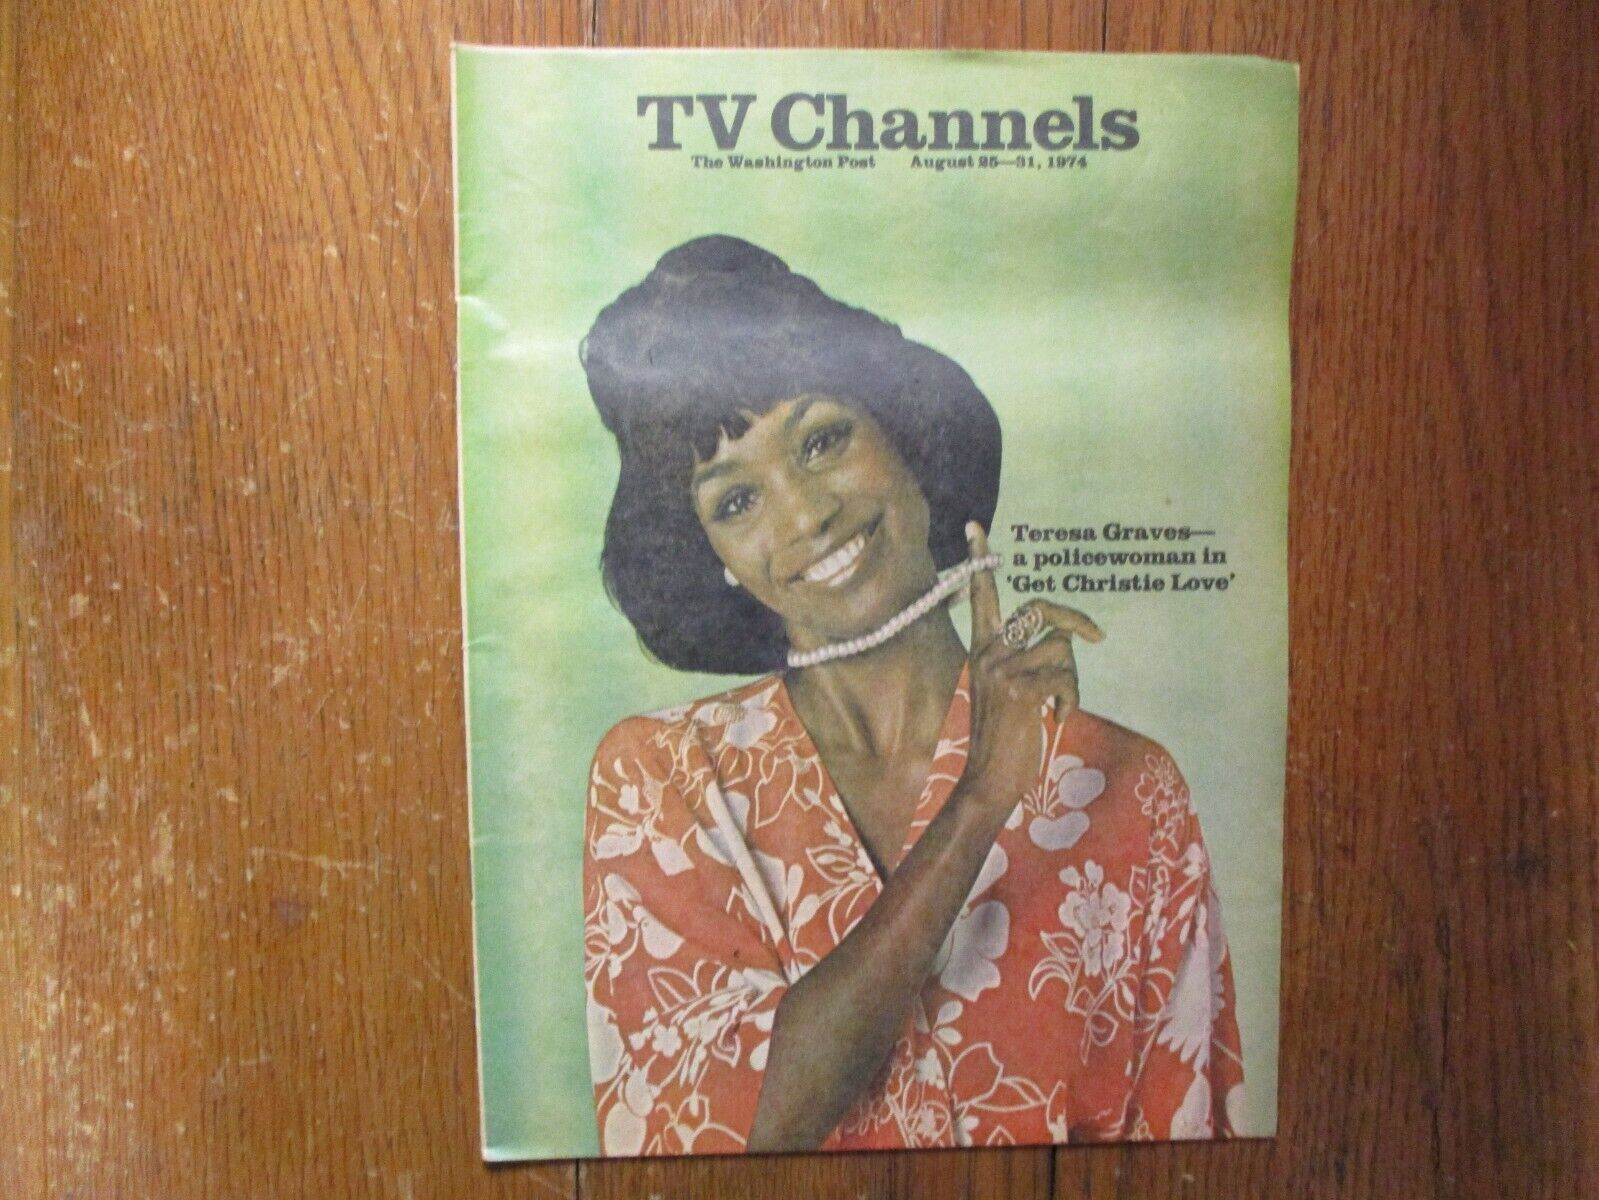 Aug 25-1974 Washington Post TV Channels Magazine(TERESA GRAVES/GET CHRISTIE LOVE